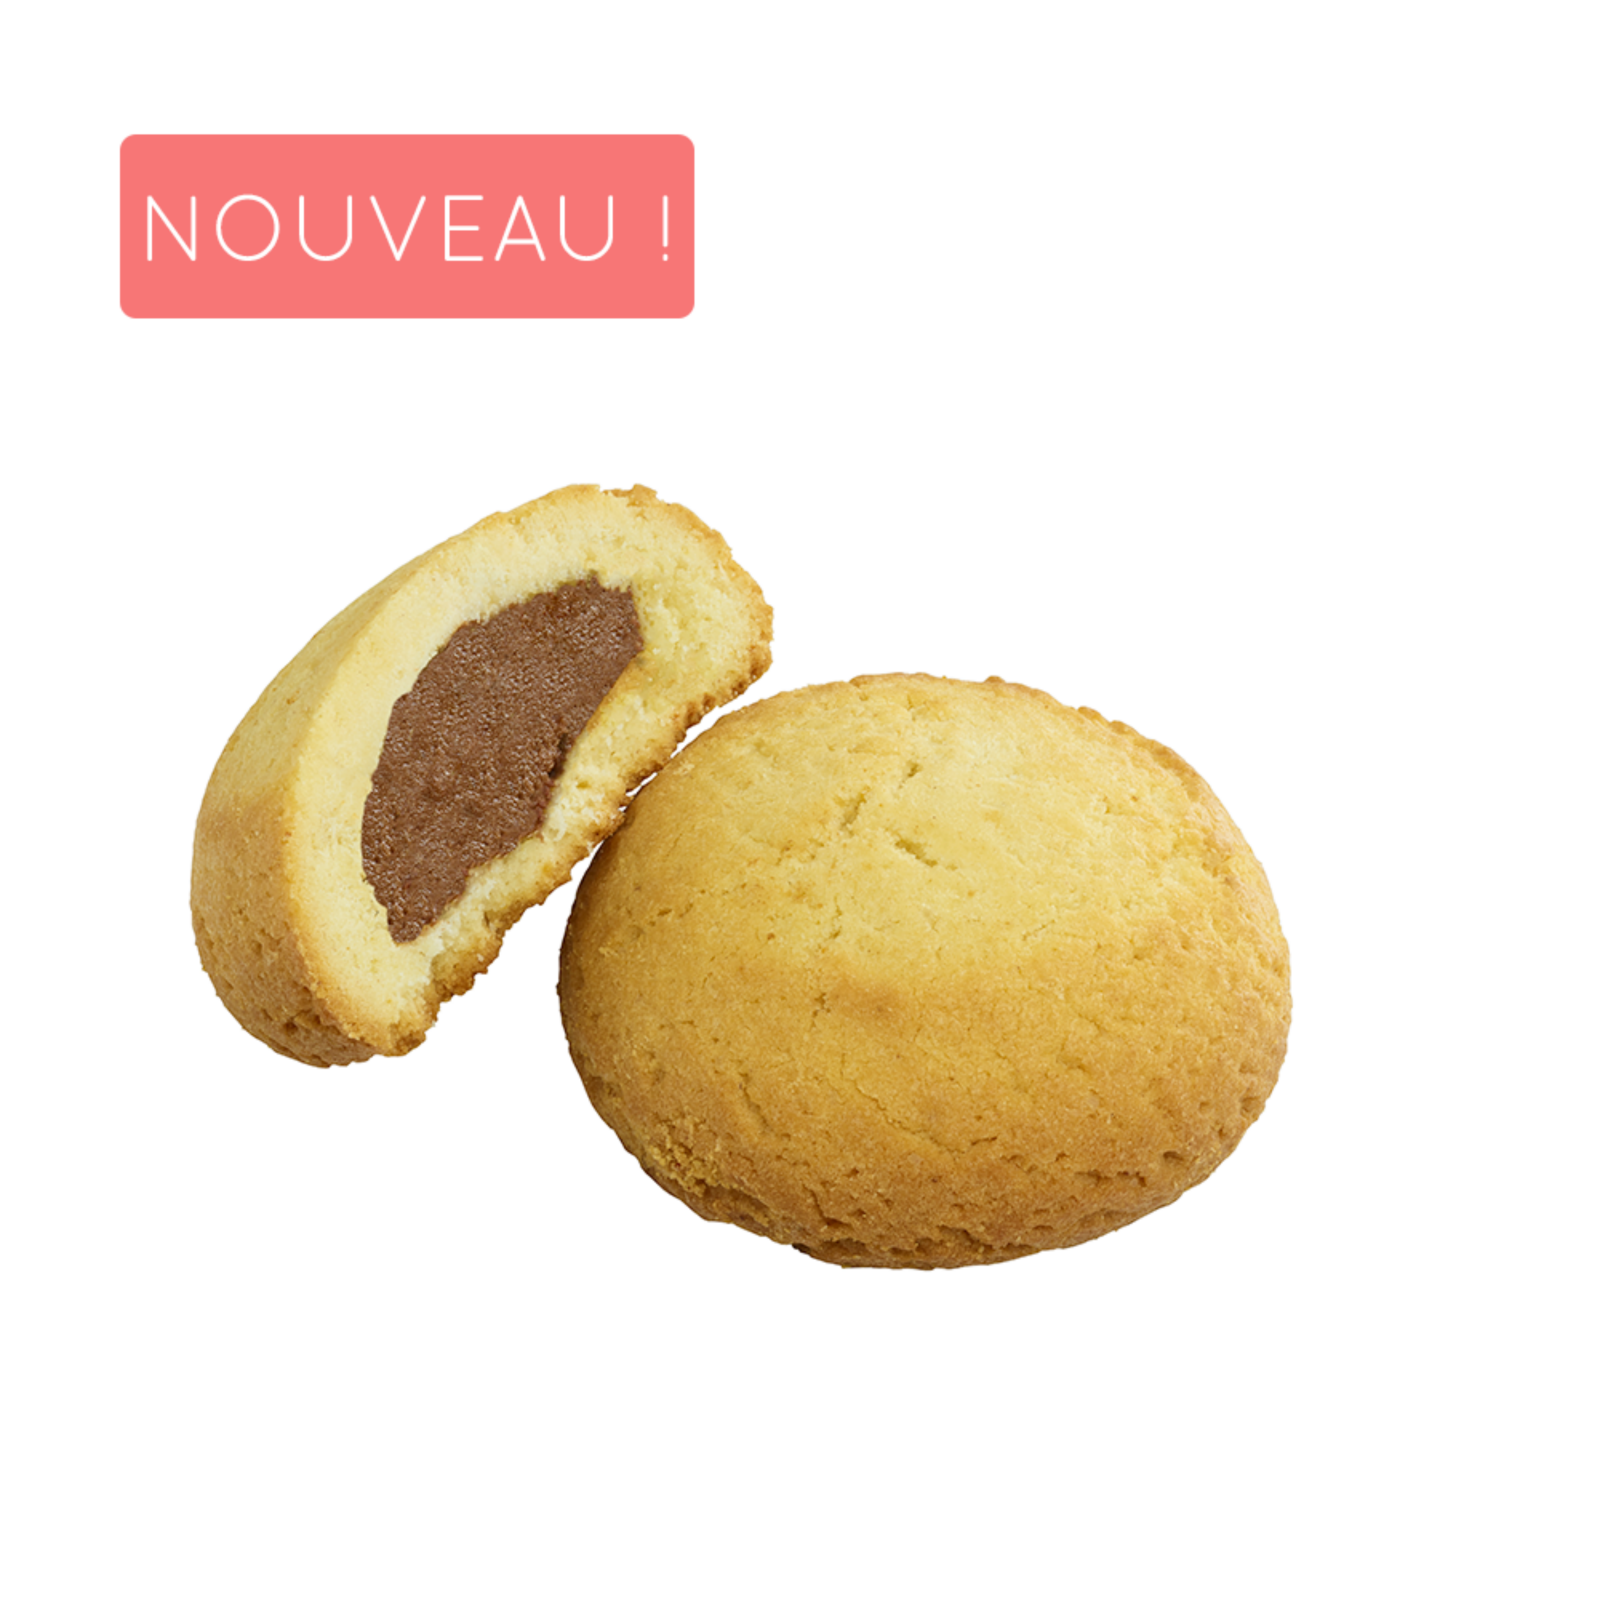 Biscuit coeur choco noisette 200g